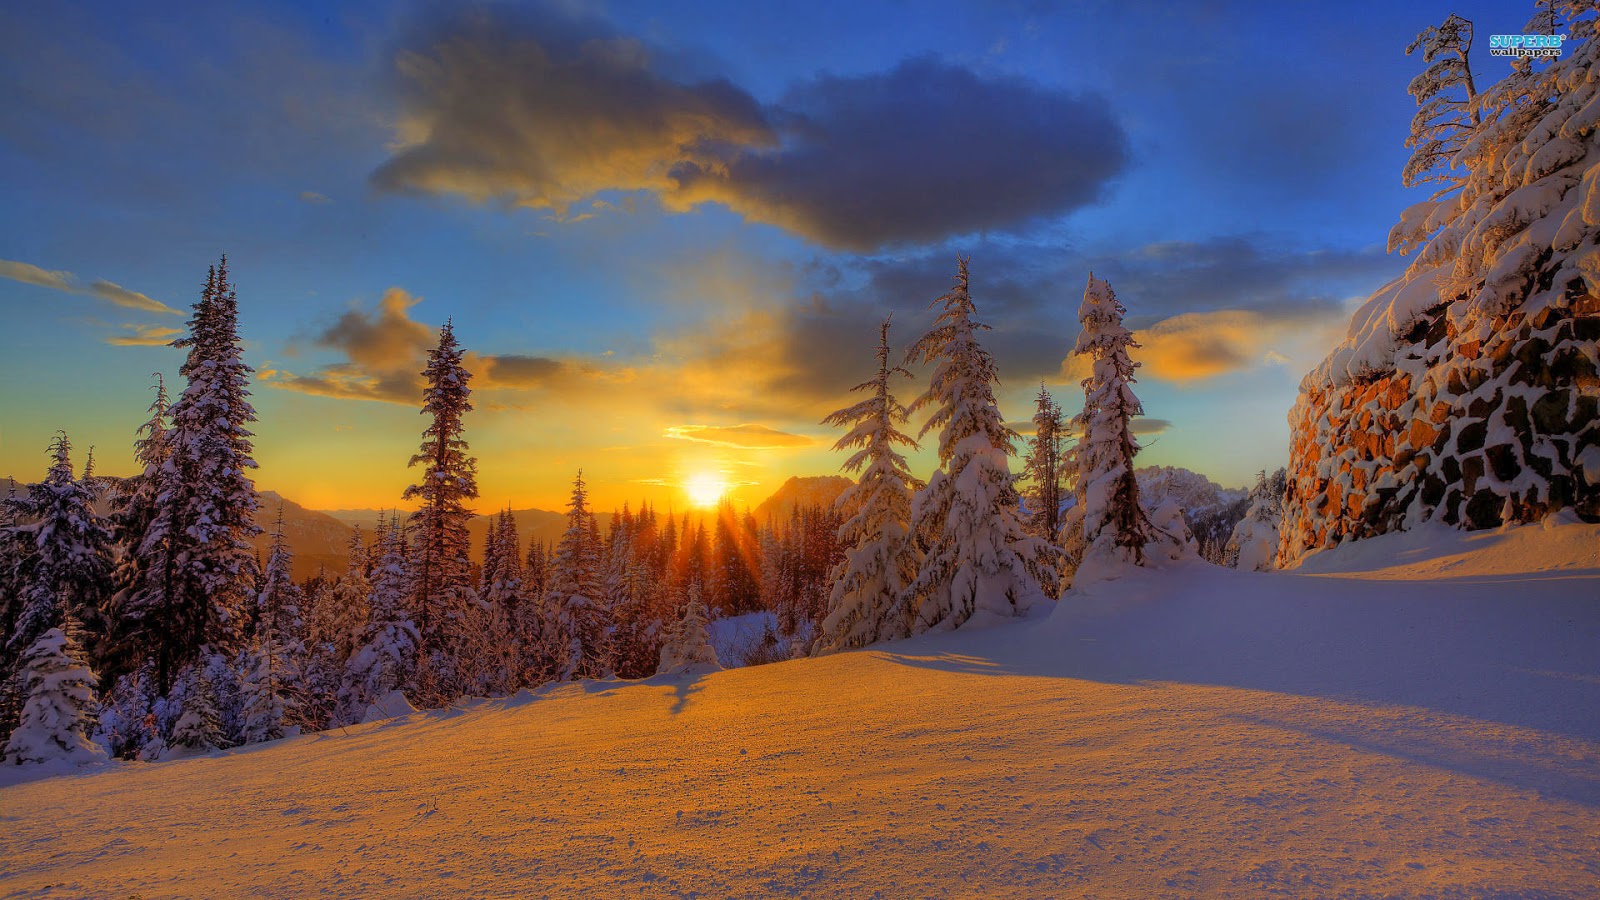 Beautiful Snowy Mountain Sunset Nature Image Wallpaper